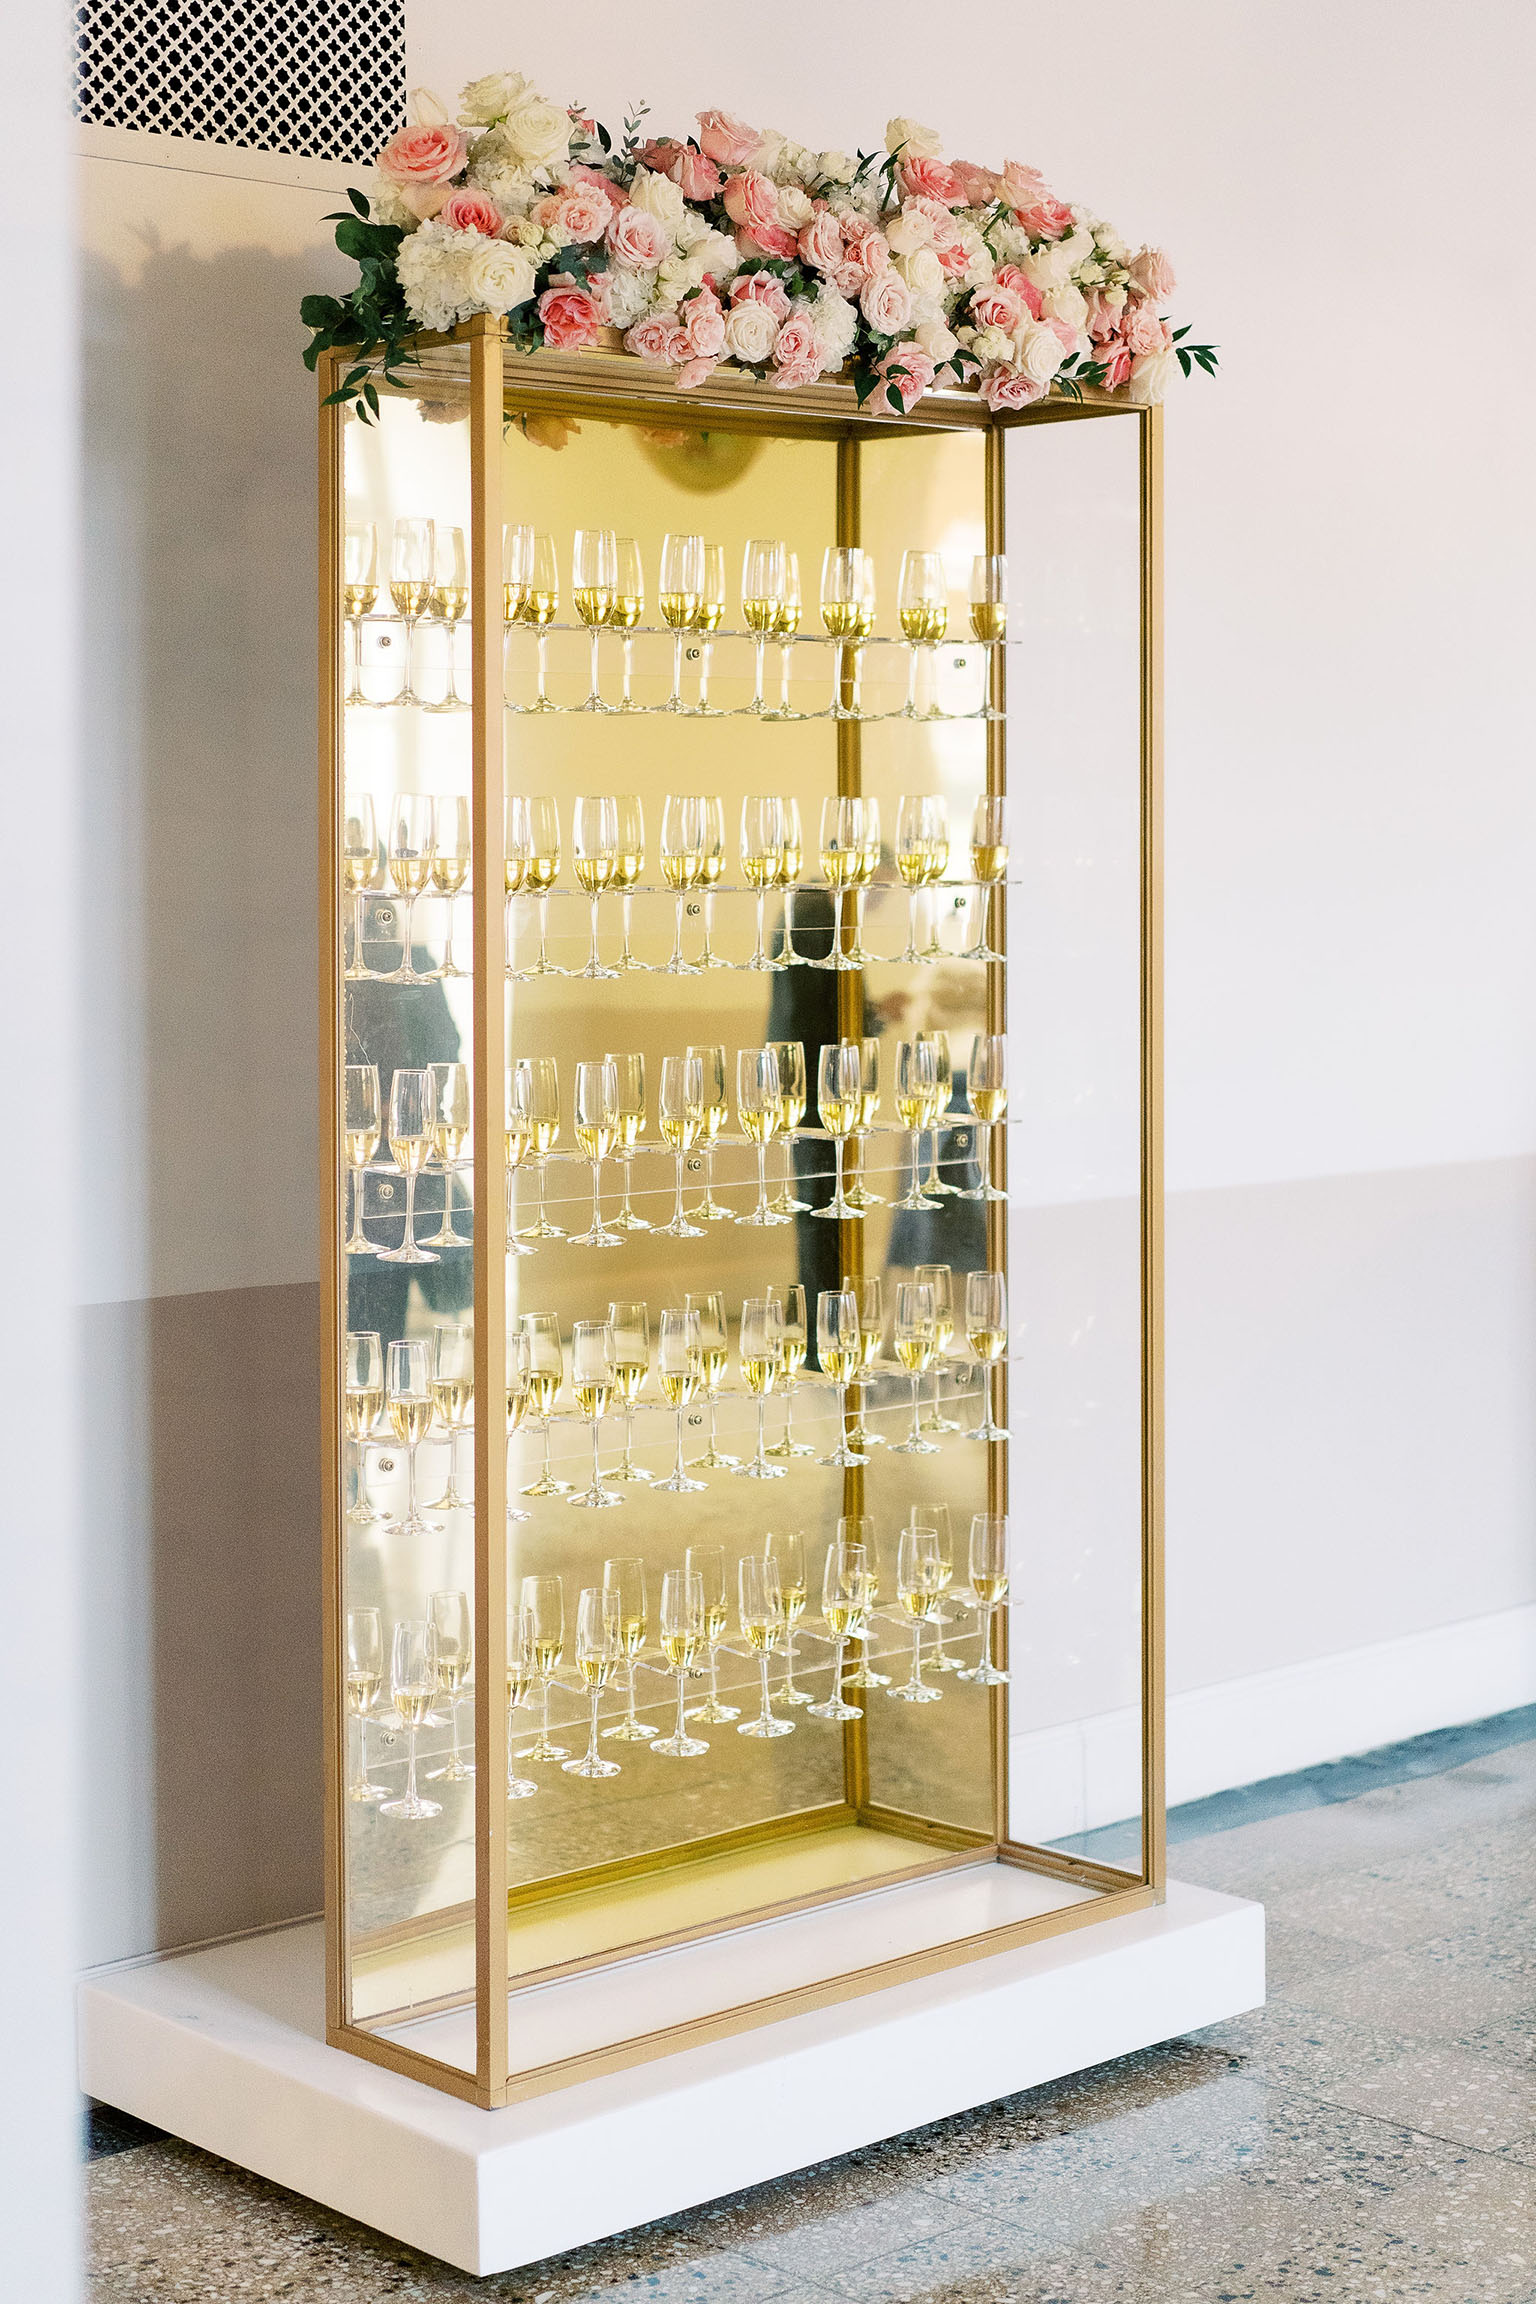 Golden shelving unit holding filled glasses of champagne